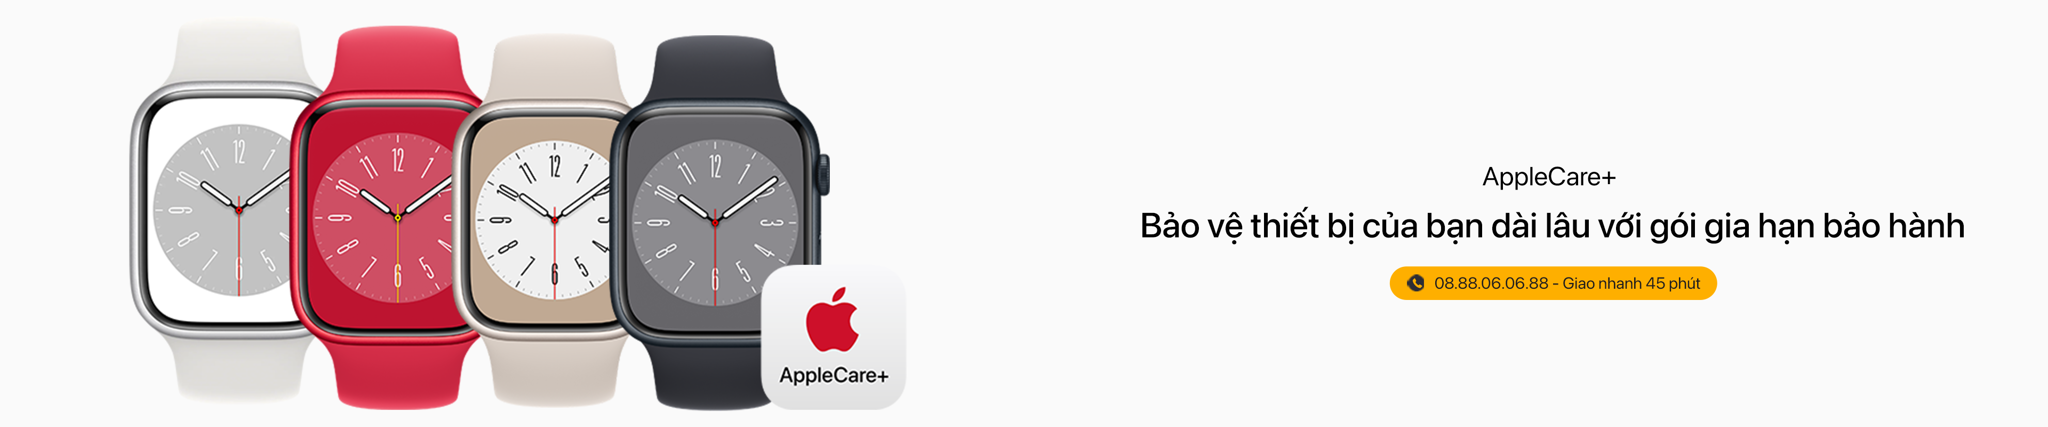 AppleCare+ Apple Watch